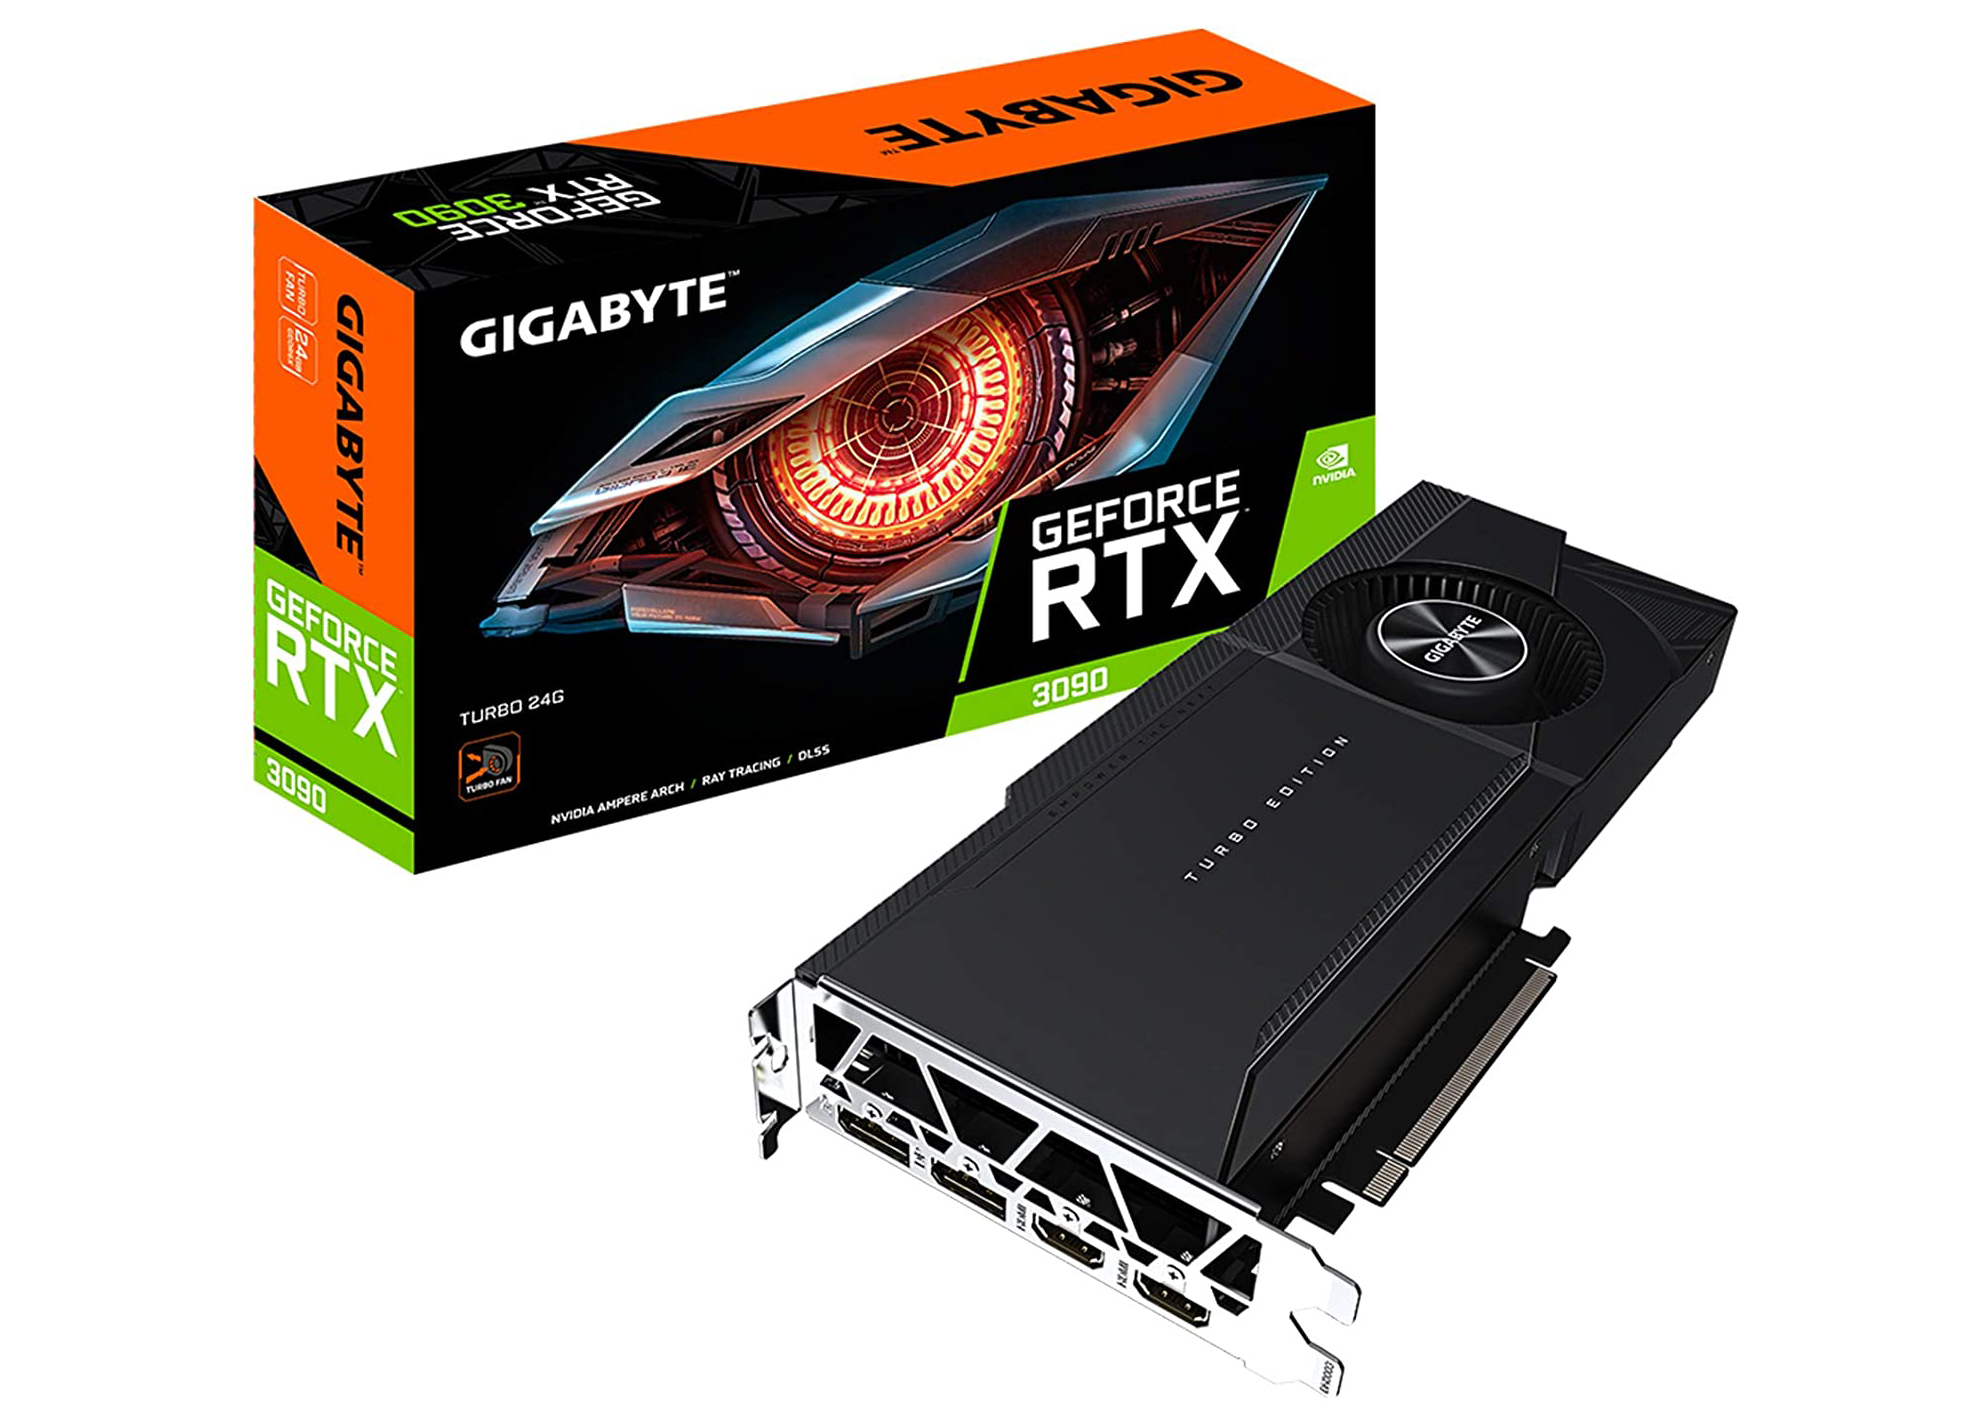 NVIDIA GIGABYTE GeForce RTX 3090 TURBO 24G Graphics Card (GV ...